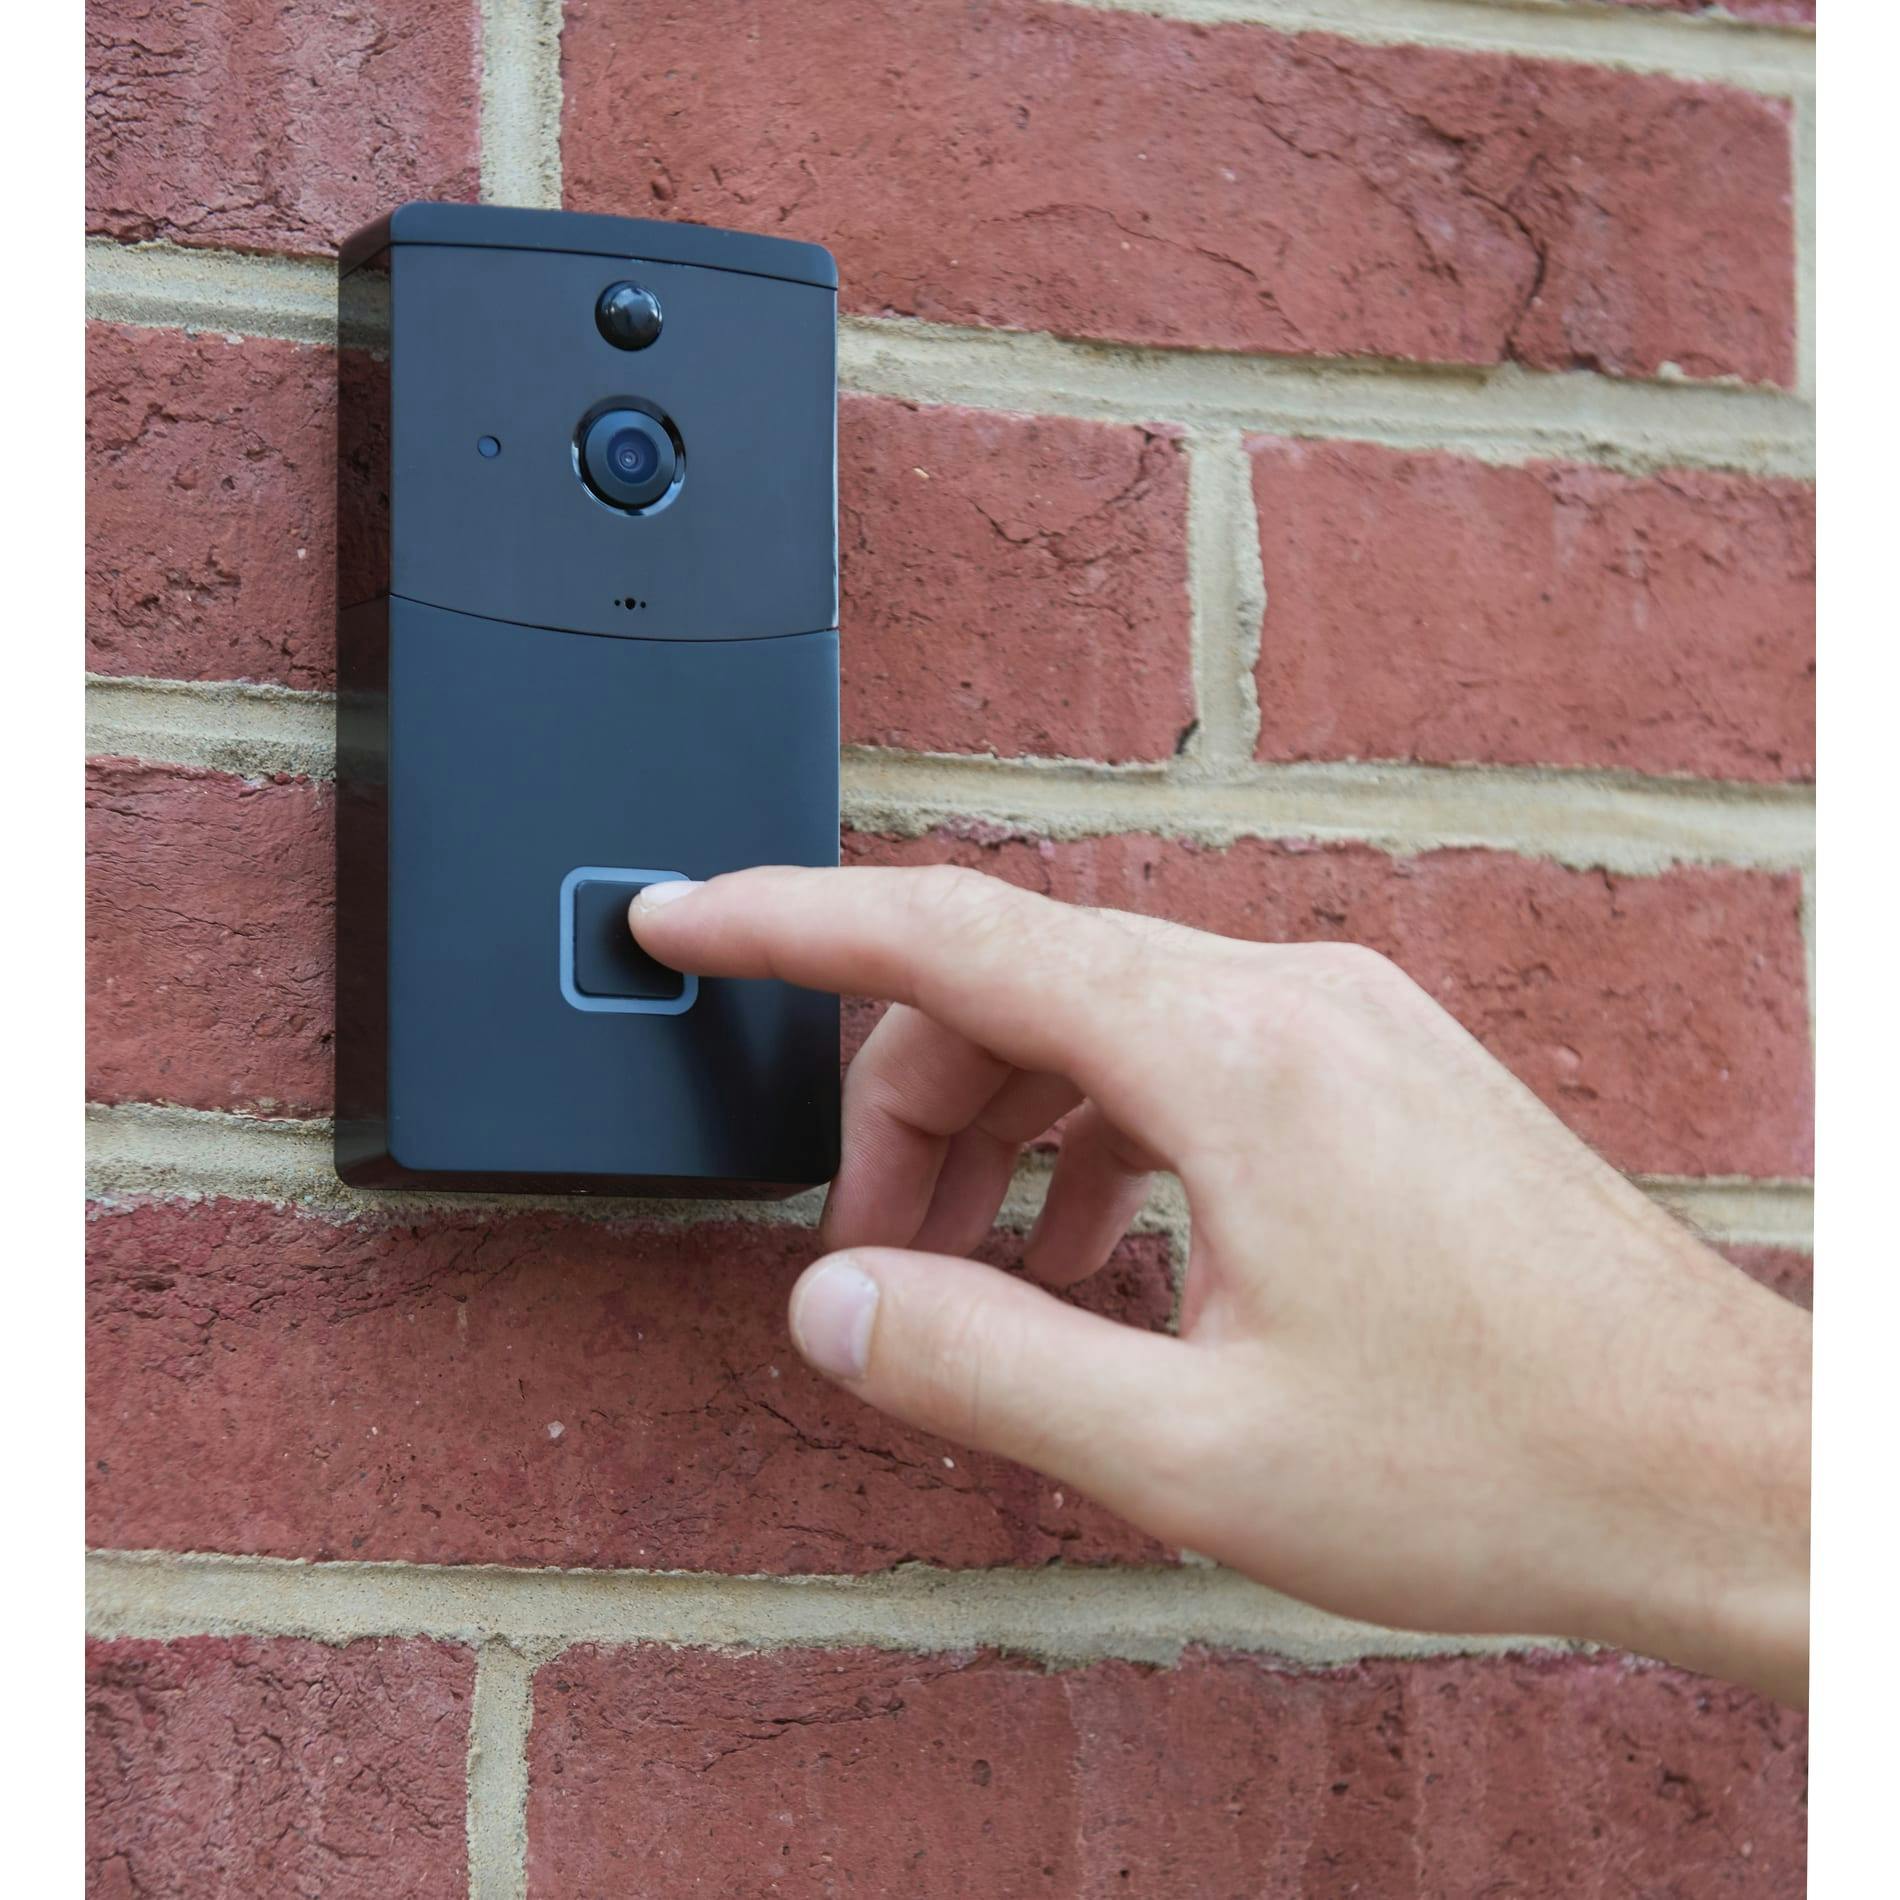 Smart Wifi Video Doorbell - additional Image 2